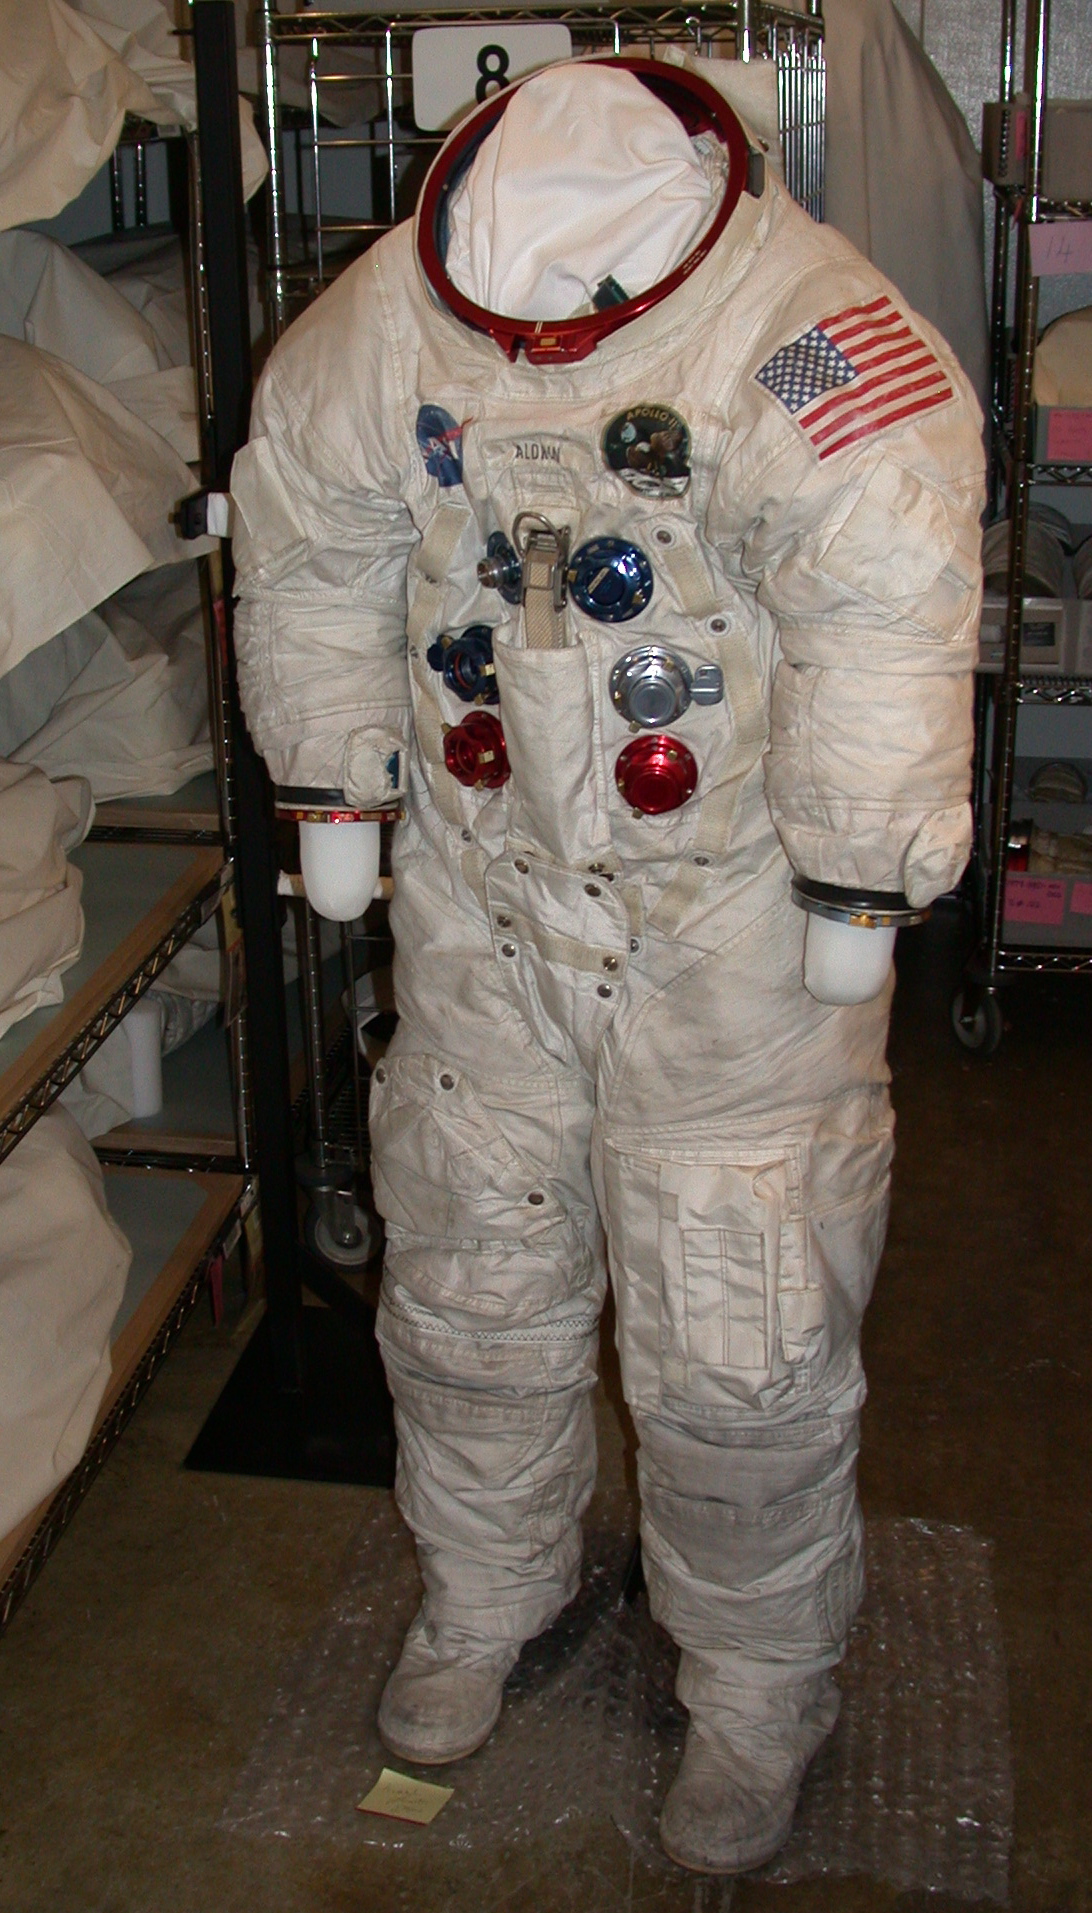 Buzz Aldrin's Apollo 11 Suit